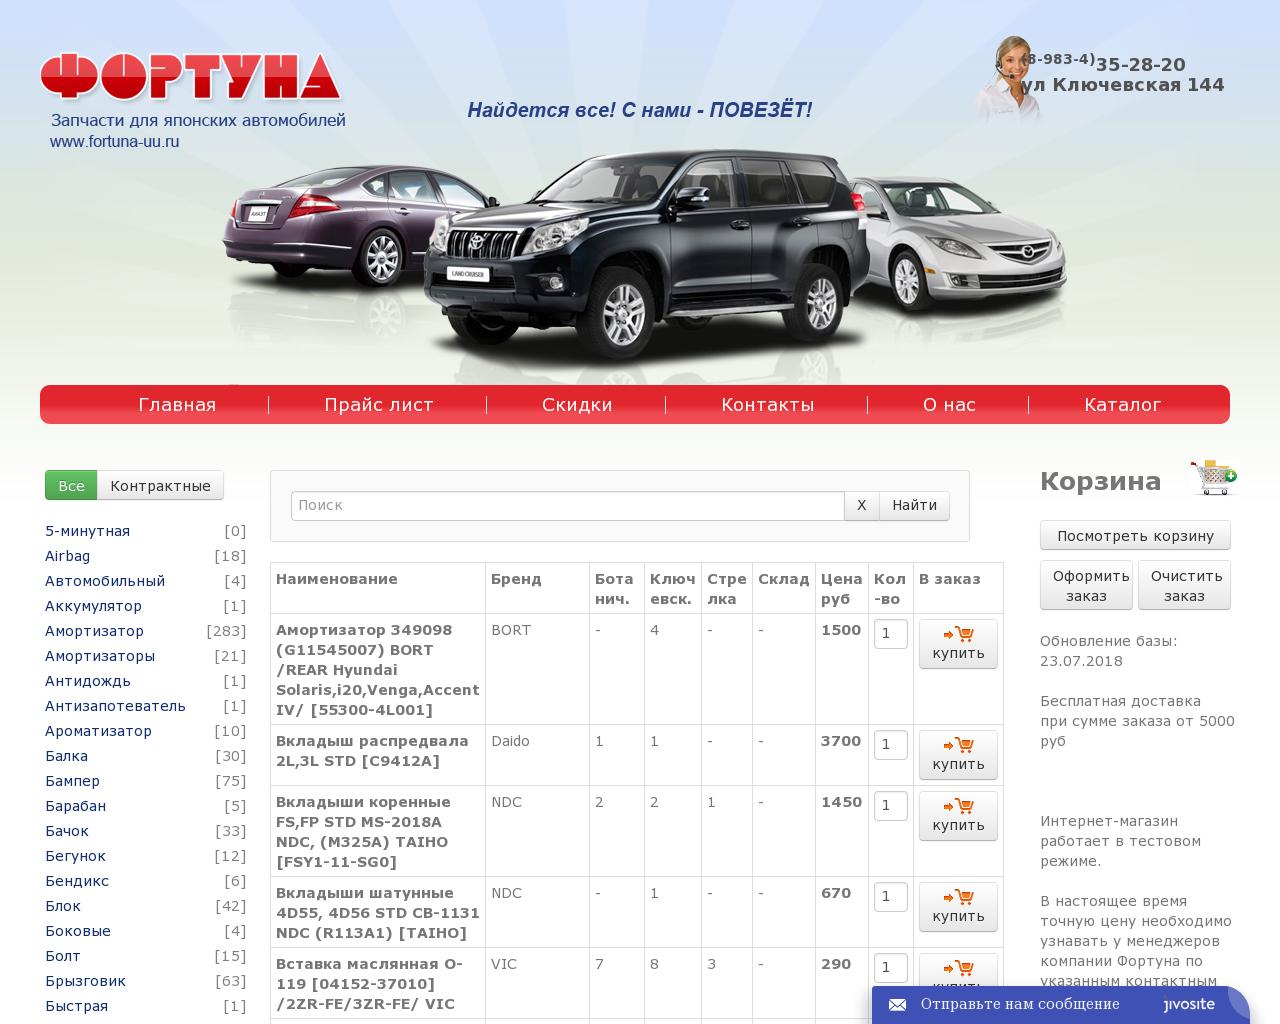 Изображение сайта fortuna-uu.ru в разрешении 1280x1024